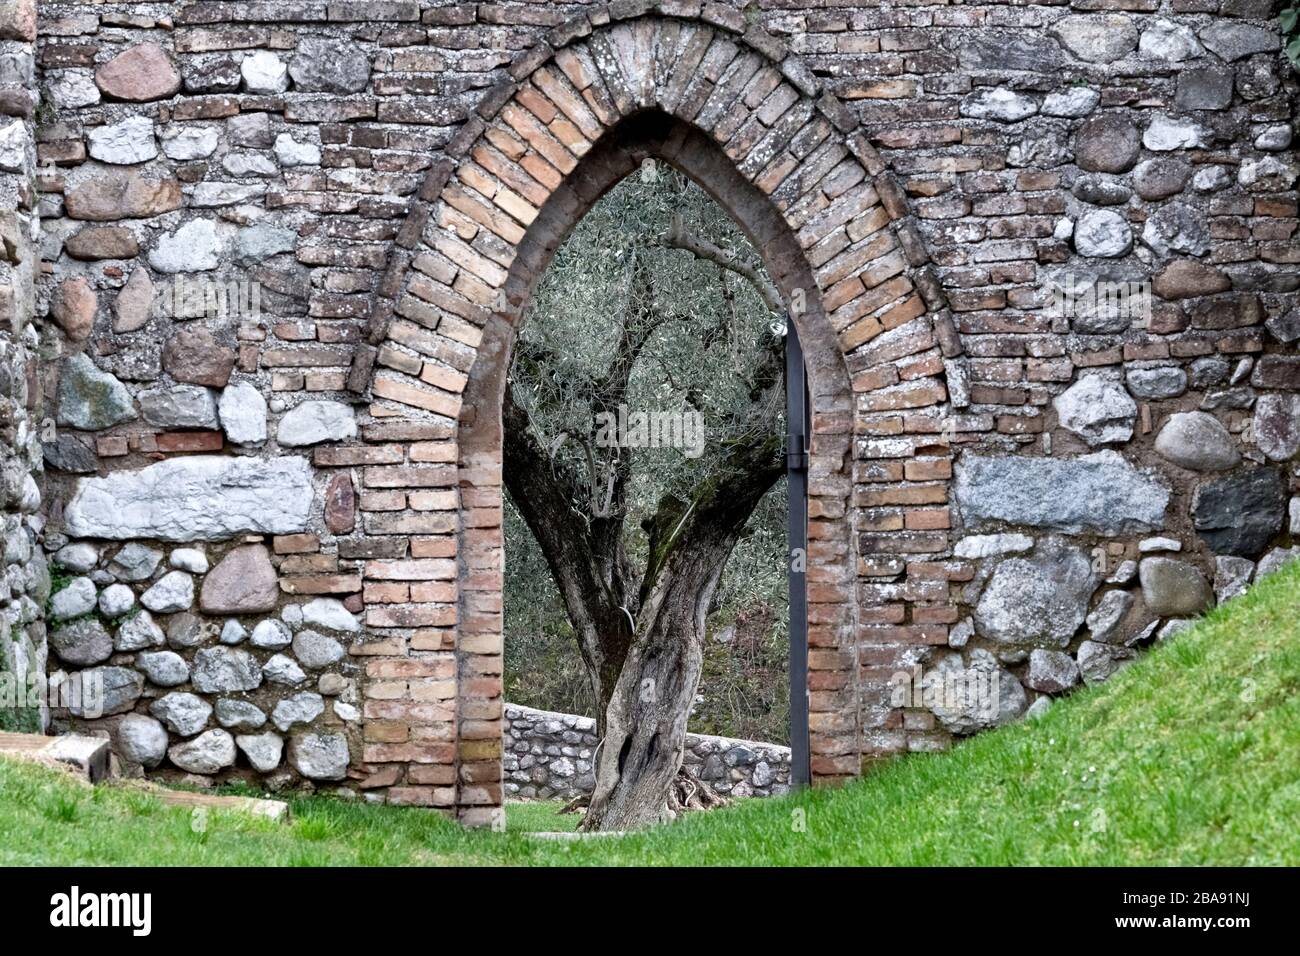 Rocca di Lonato: Un portail médiéval encadre un olivier. Lonato del Garda, province de Brescia, Lombardie, Italie, Europe. Banque D'Images